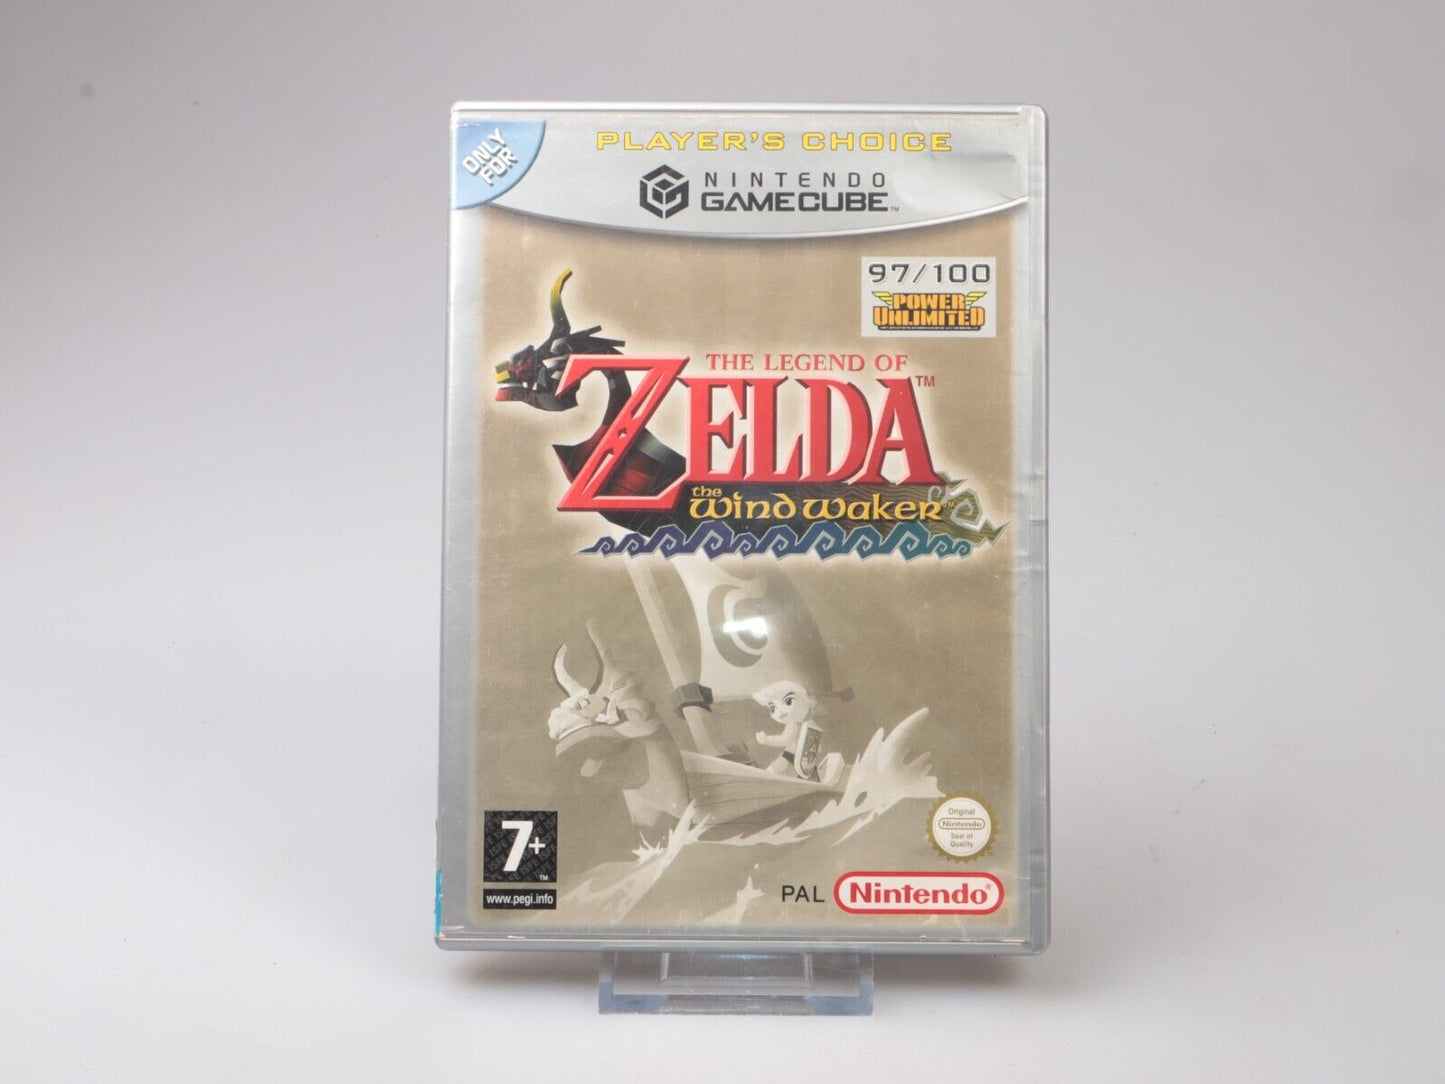 GameCube | The Legend of Zelda: The Wind Waker (gekrast) | PC PAL HOL 